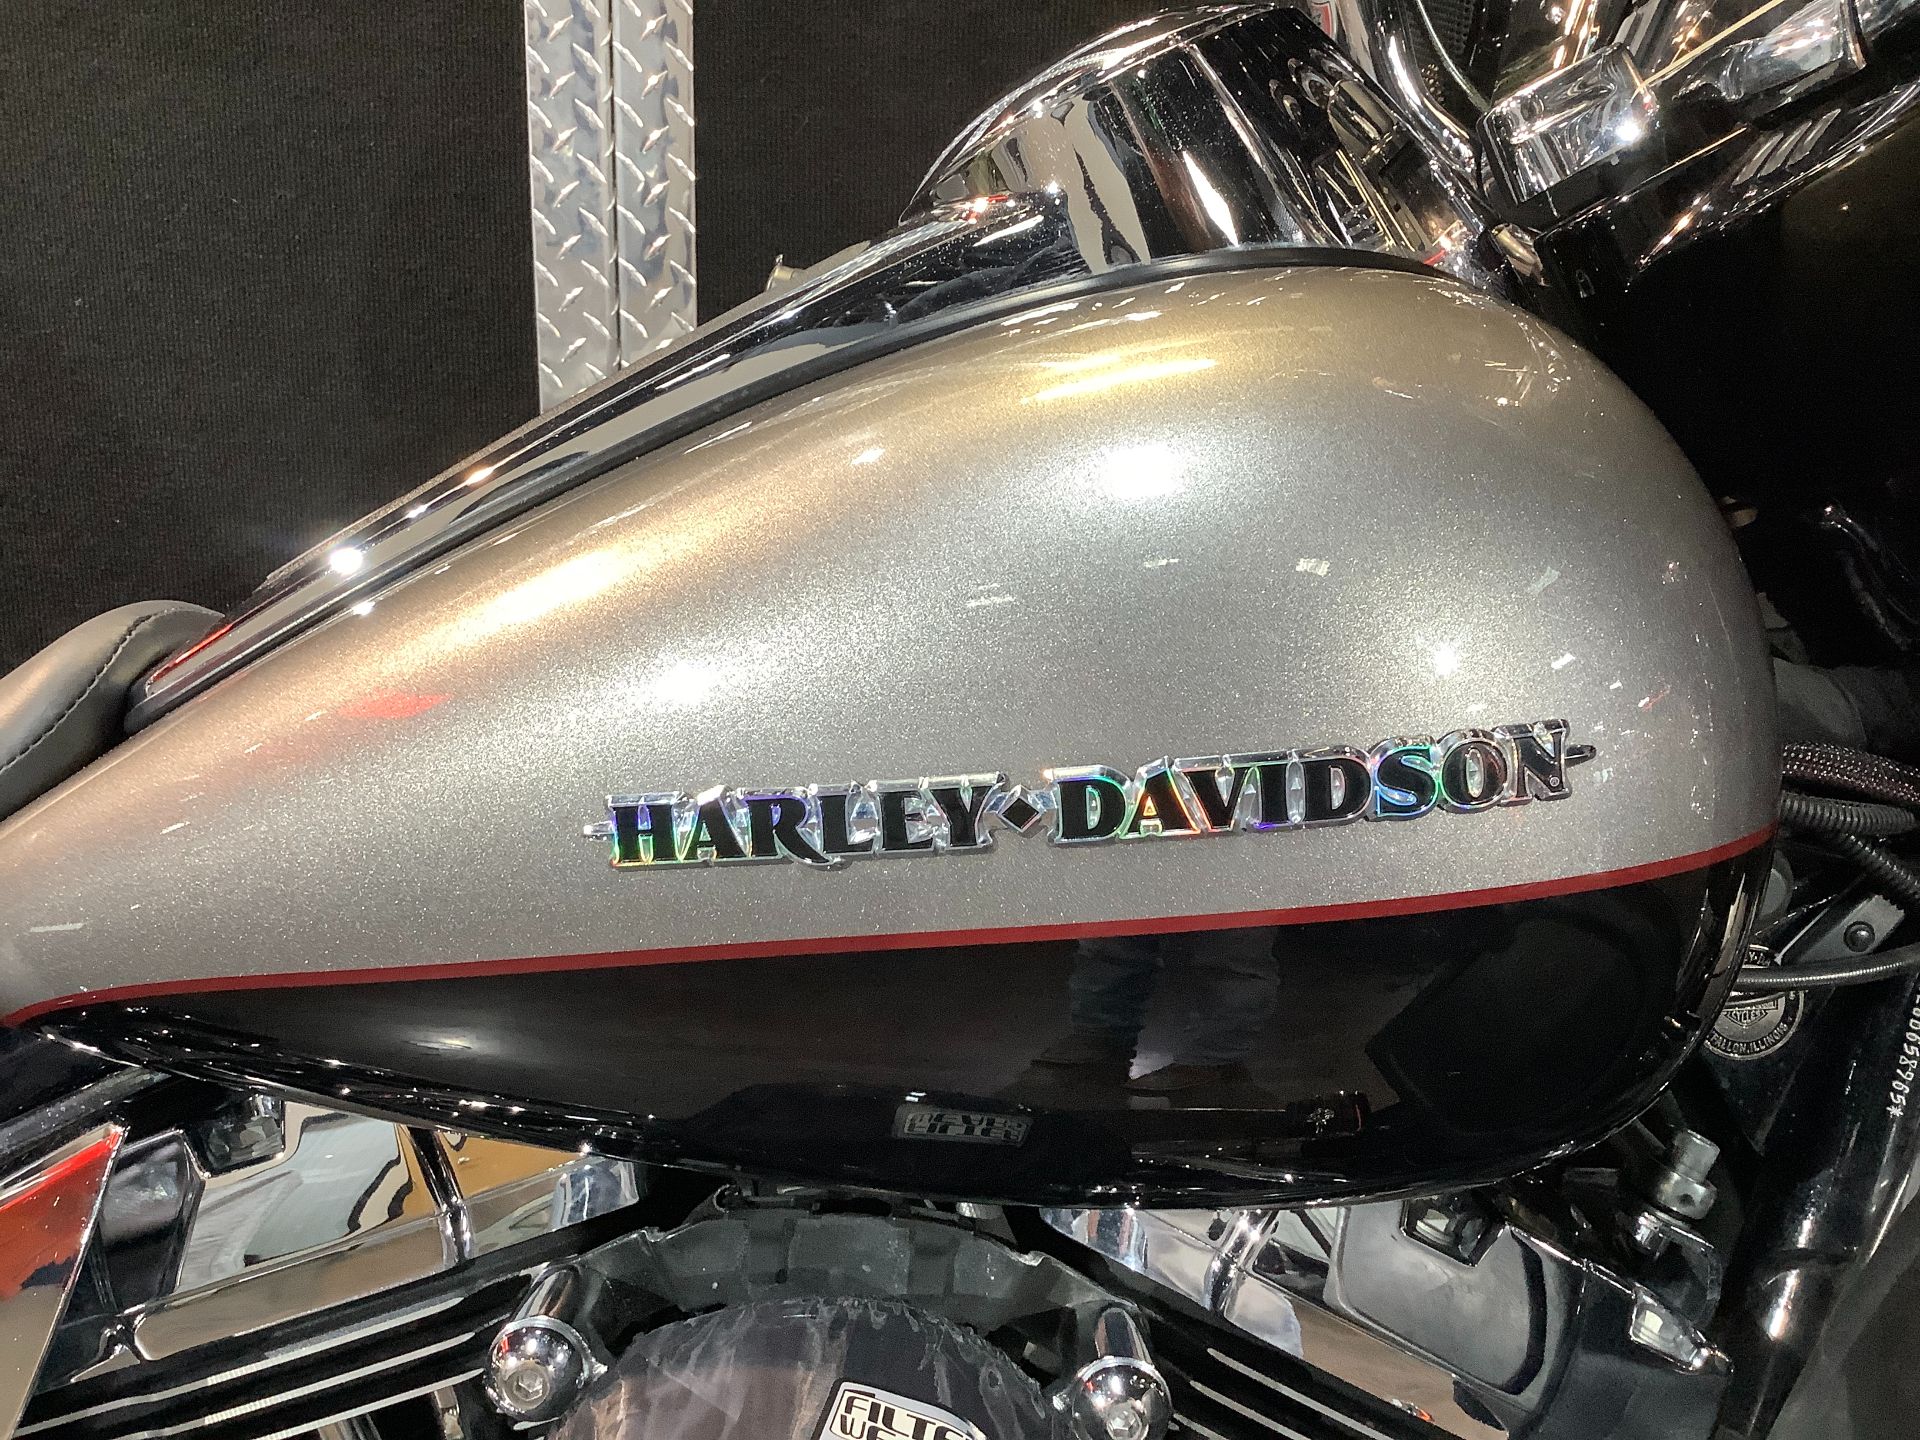 2016 Harley-Davidson Ultra Limited in Burlington, Iowa - Photo 8